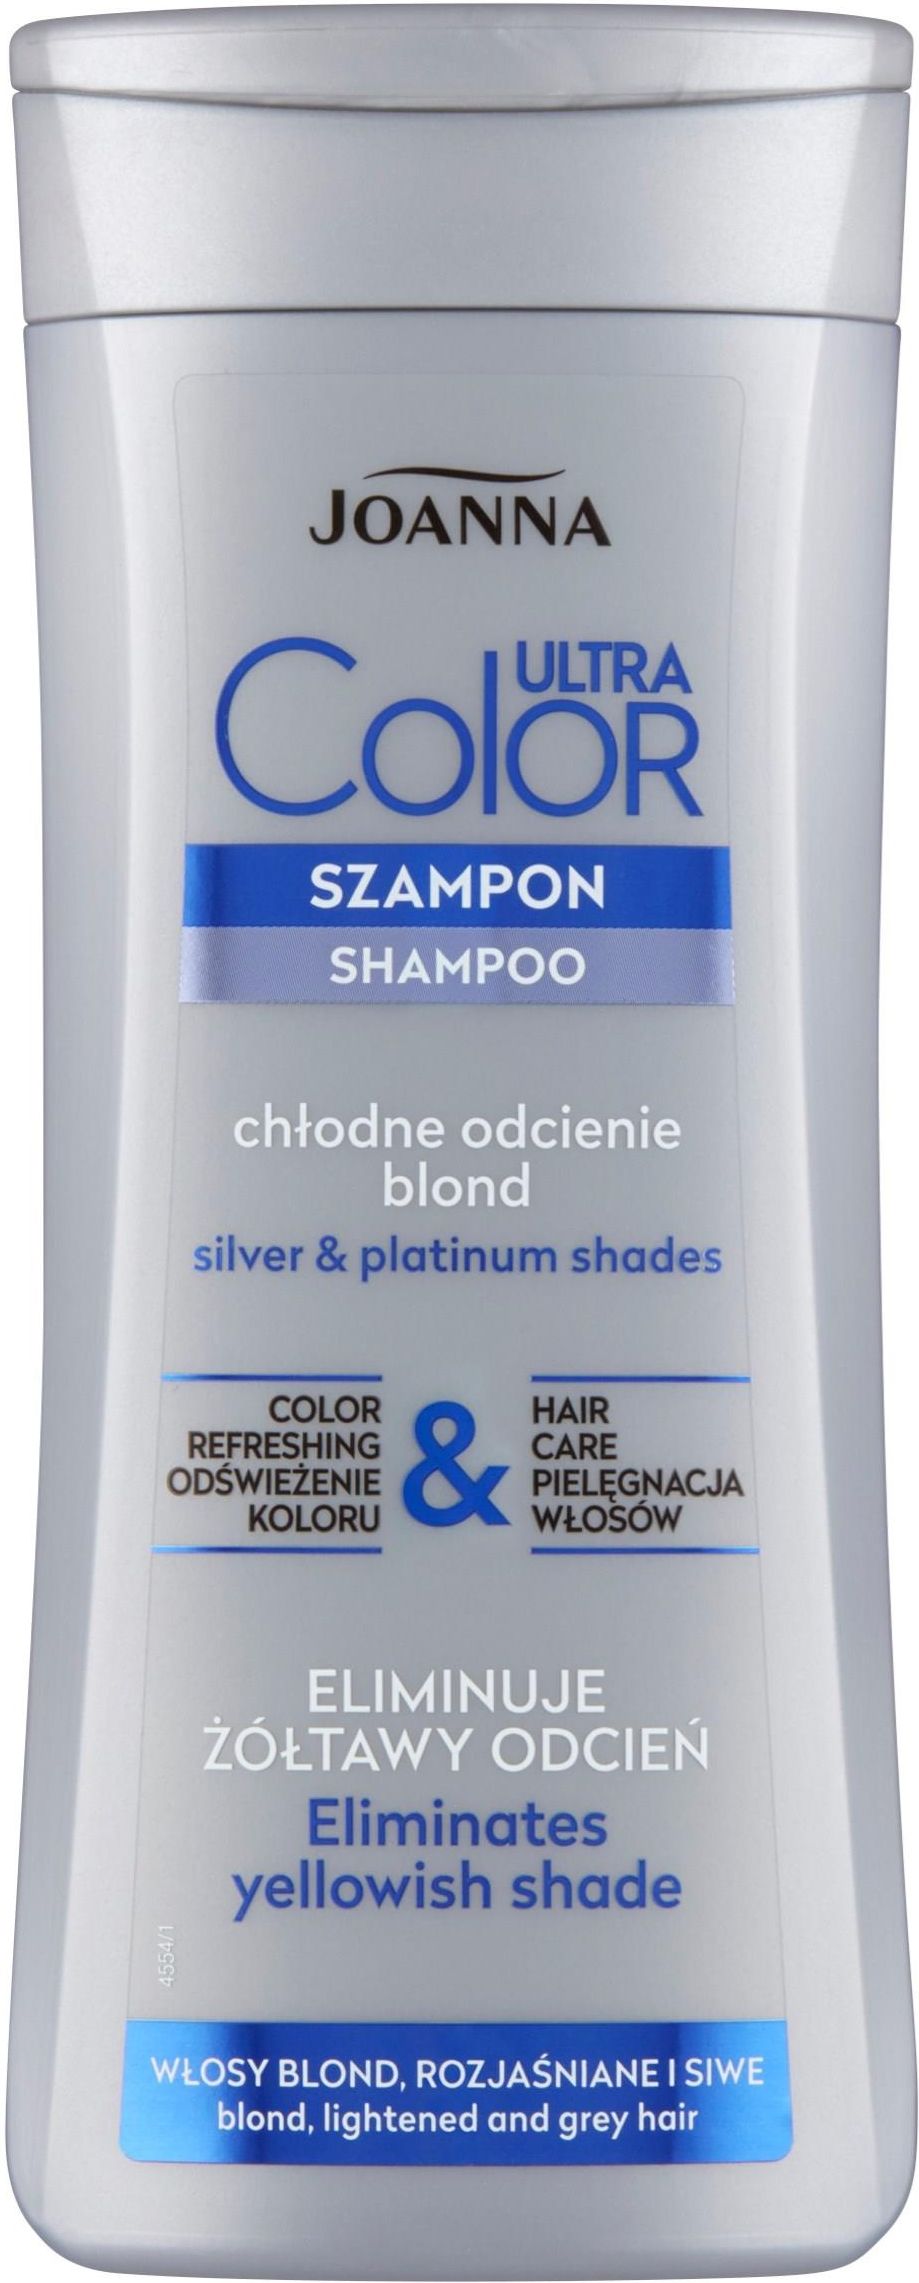 szampon ultra color